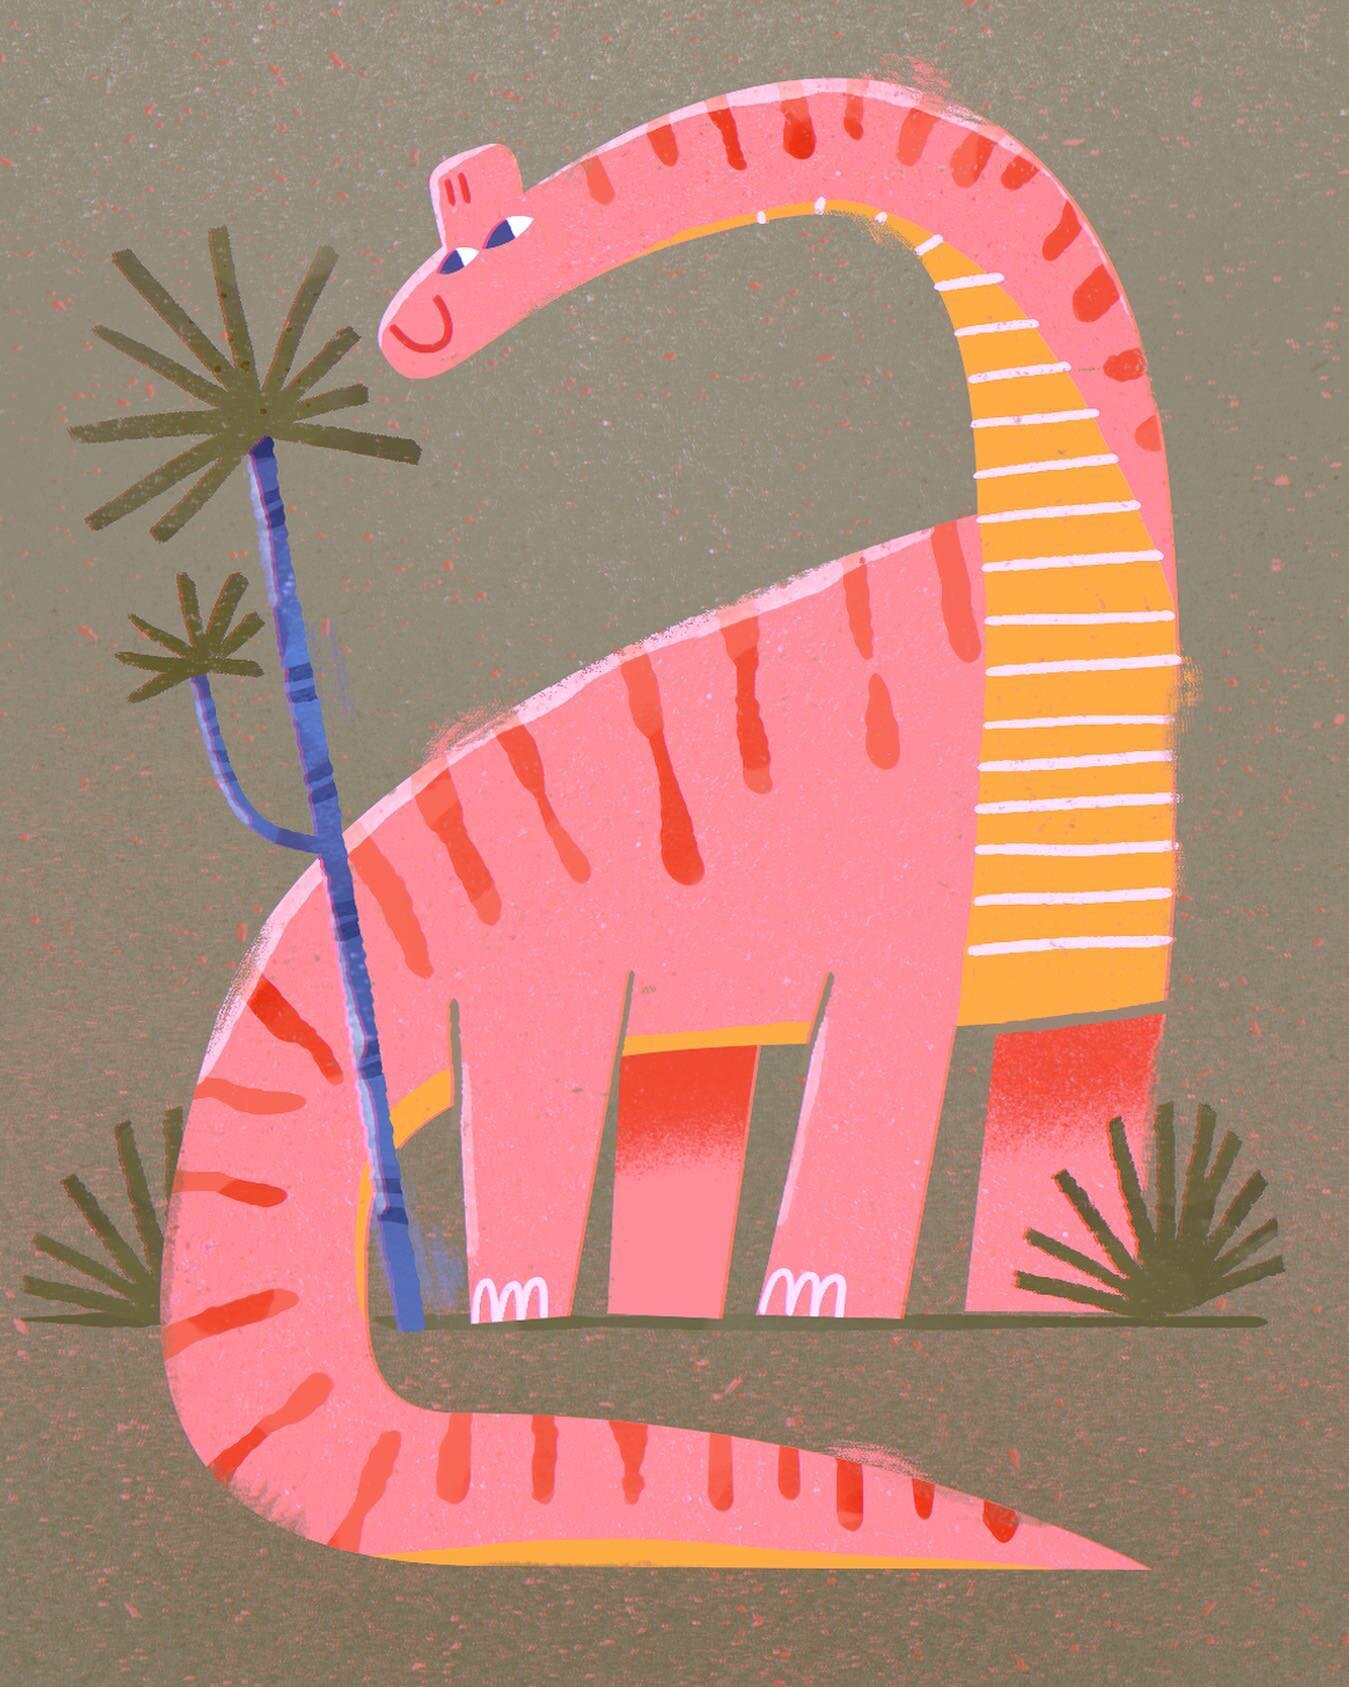 Sauropod Friday! 🌲 🦕 
.
.
.
.
#sketch #illustration #art #artsy #adobe #photoshop #procreate #drawing #doodle #digitalart #instaart #drawings #illustrations #illustratoroninstagram #artdiscover #illustrationartists #dinosaur #naturalhistorymuseum